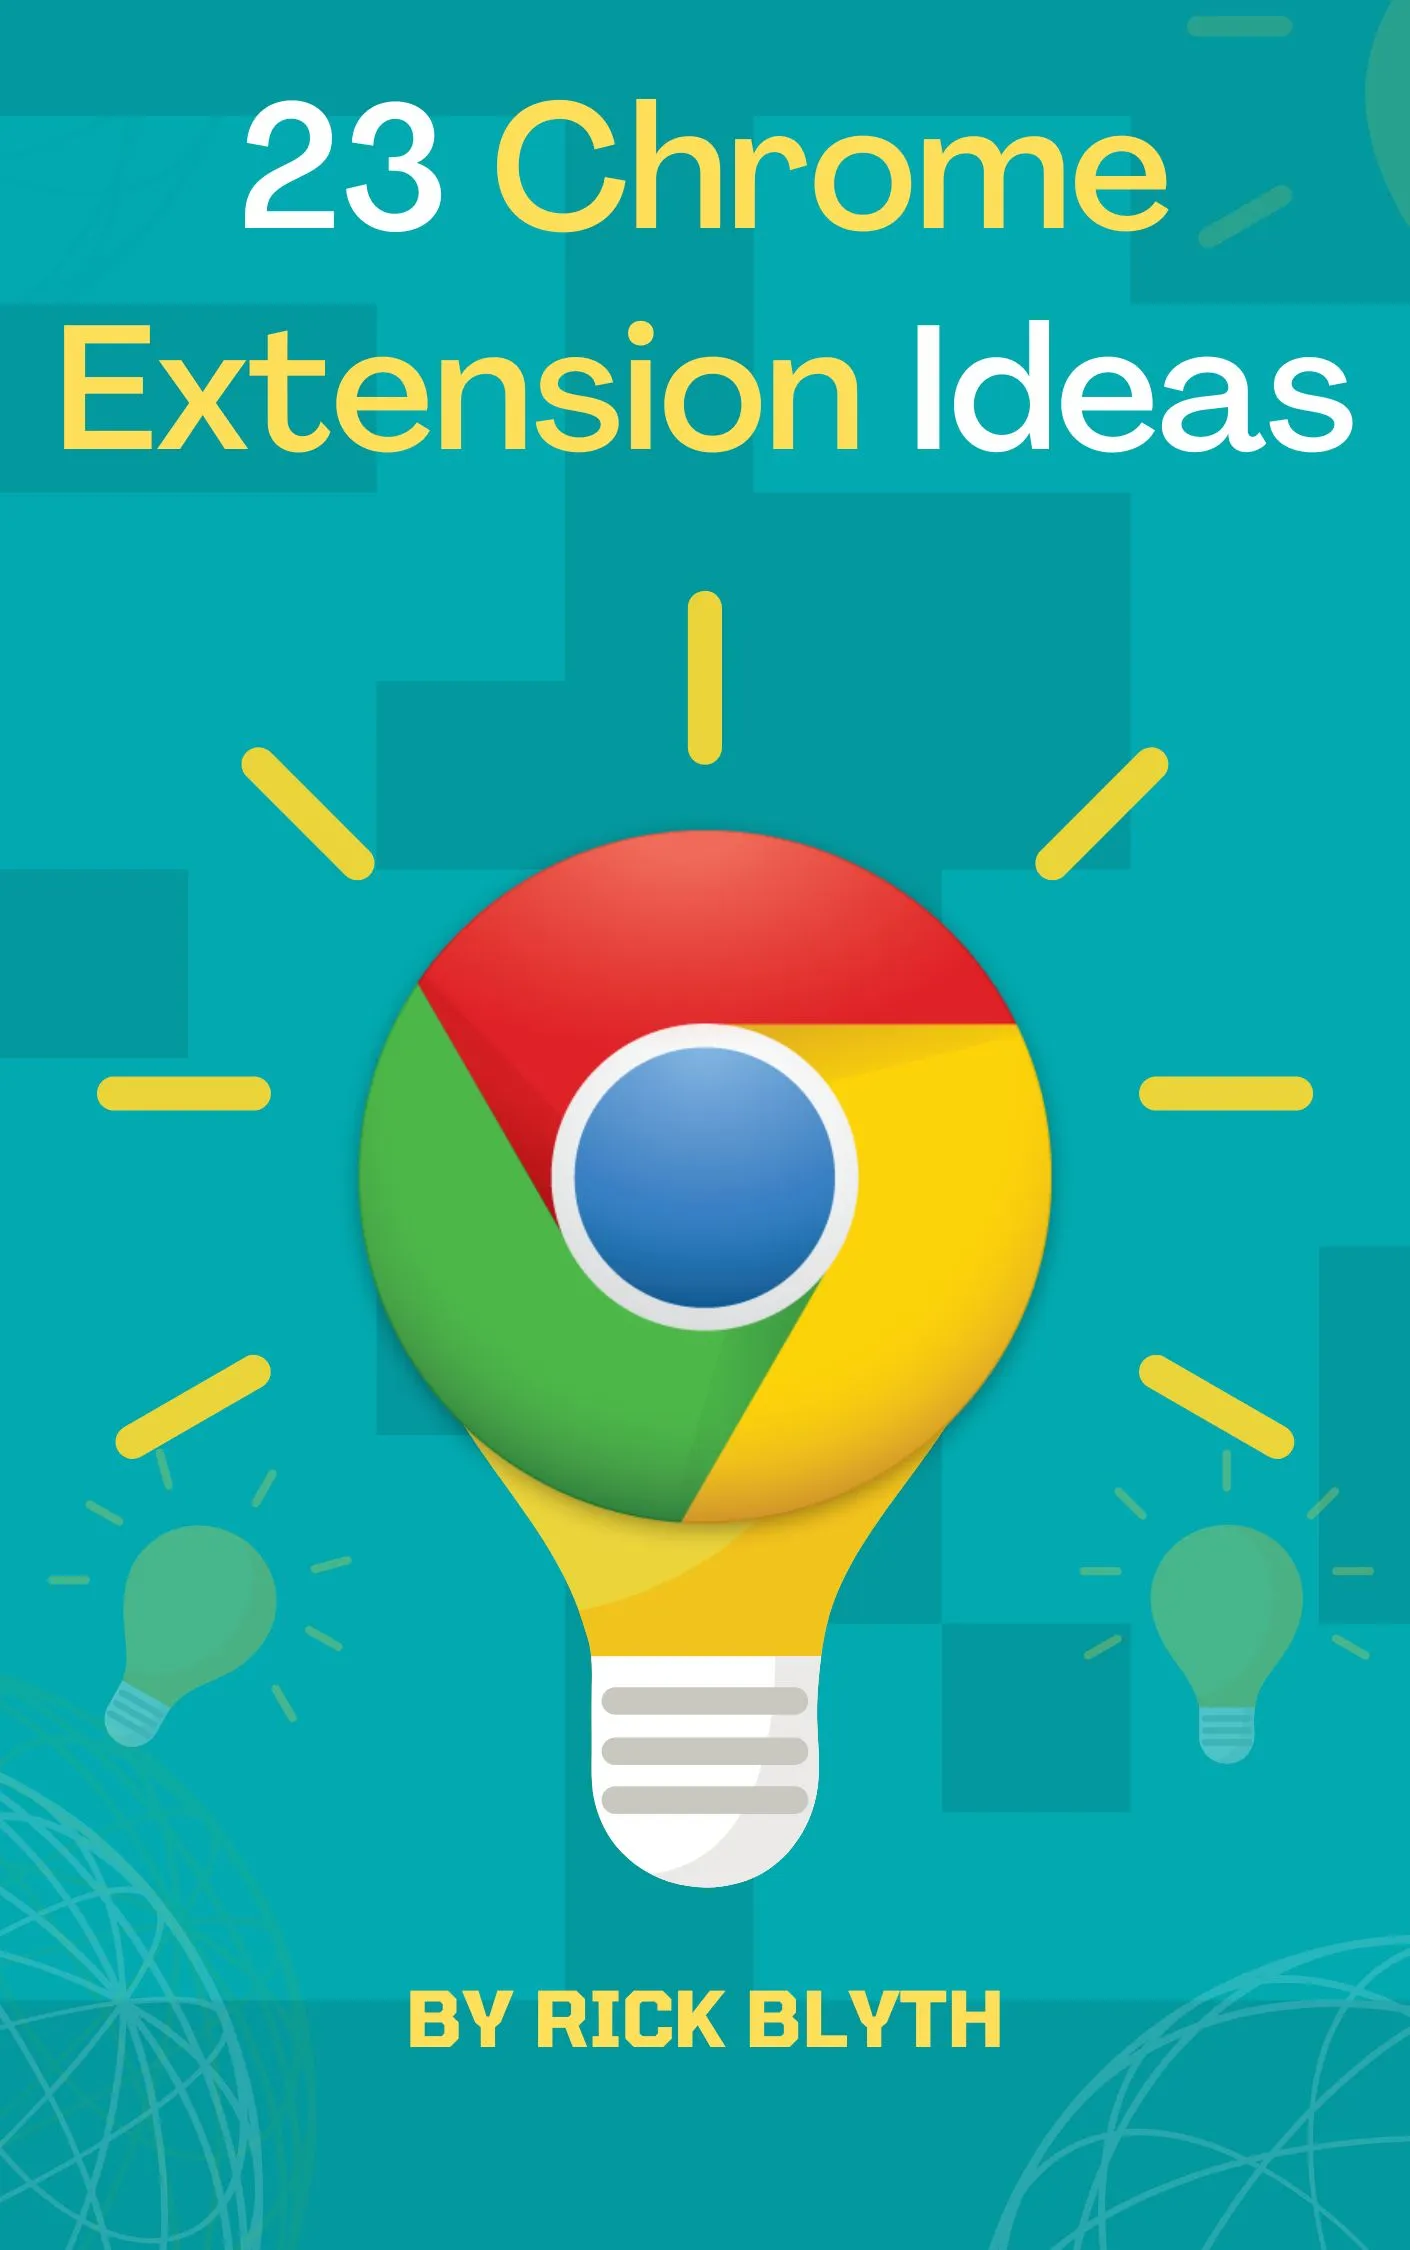 Download The Free 23 Chrome Extension Ideas PDF